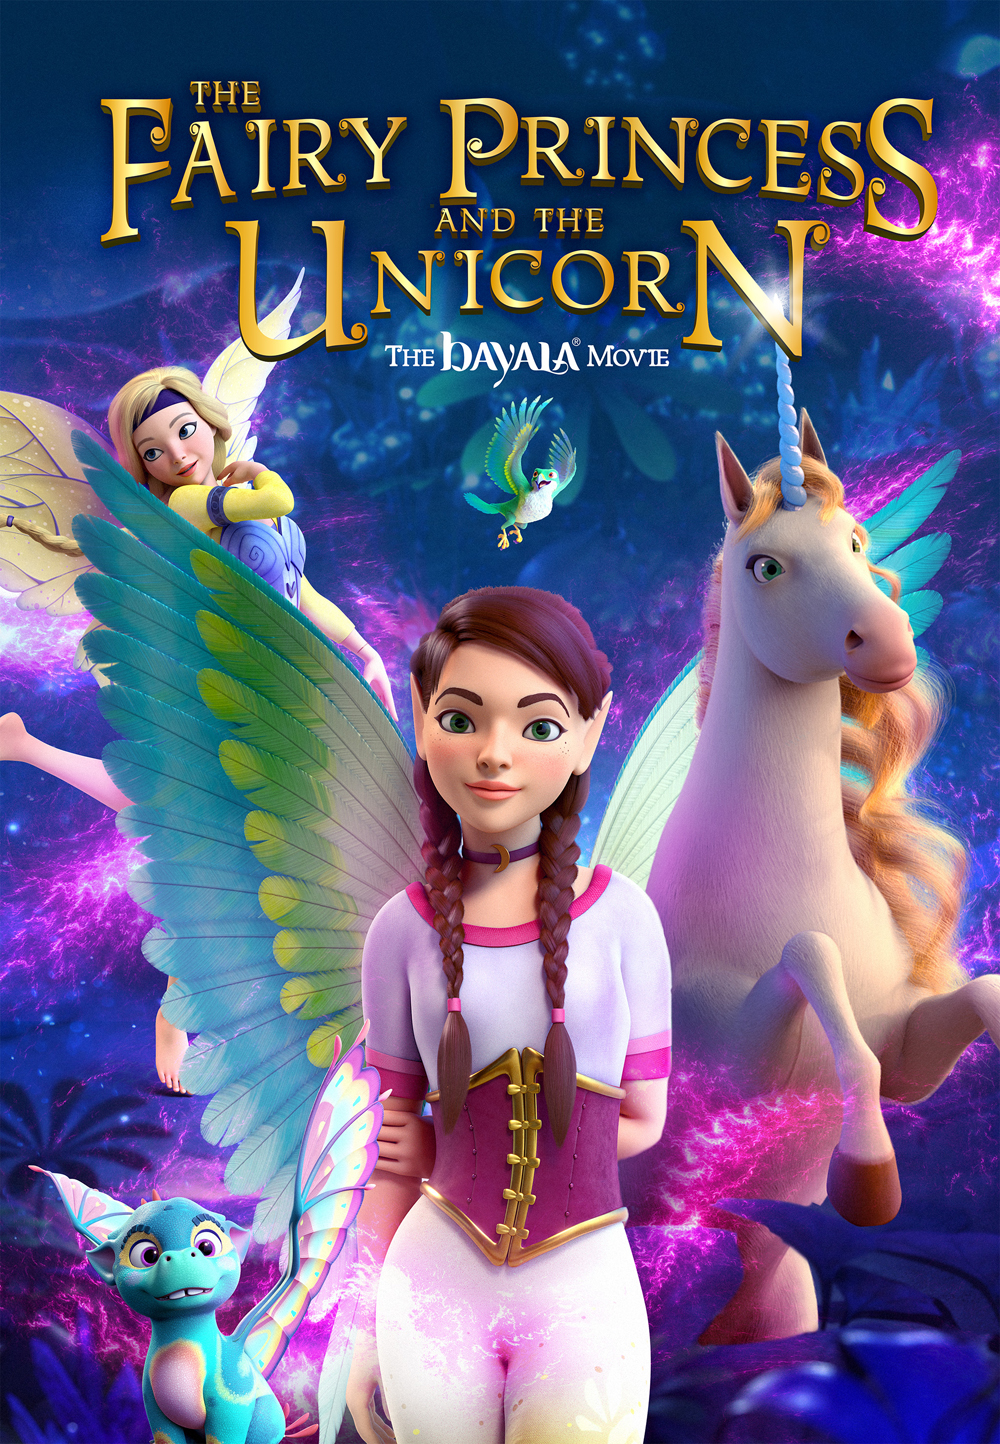 The Fairy Princess and the Unicorn: The Bayala Movie